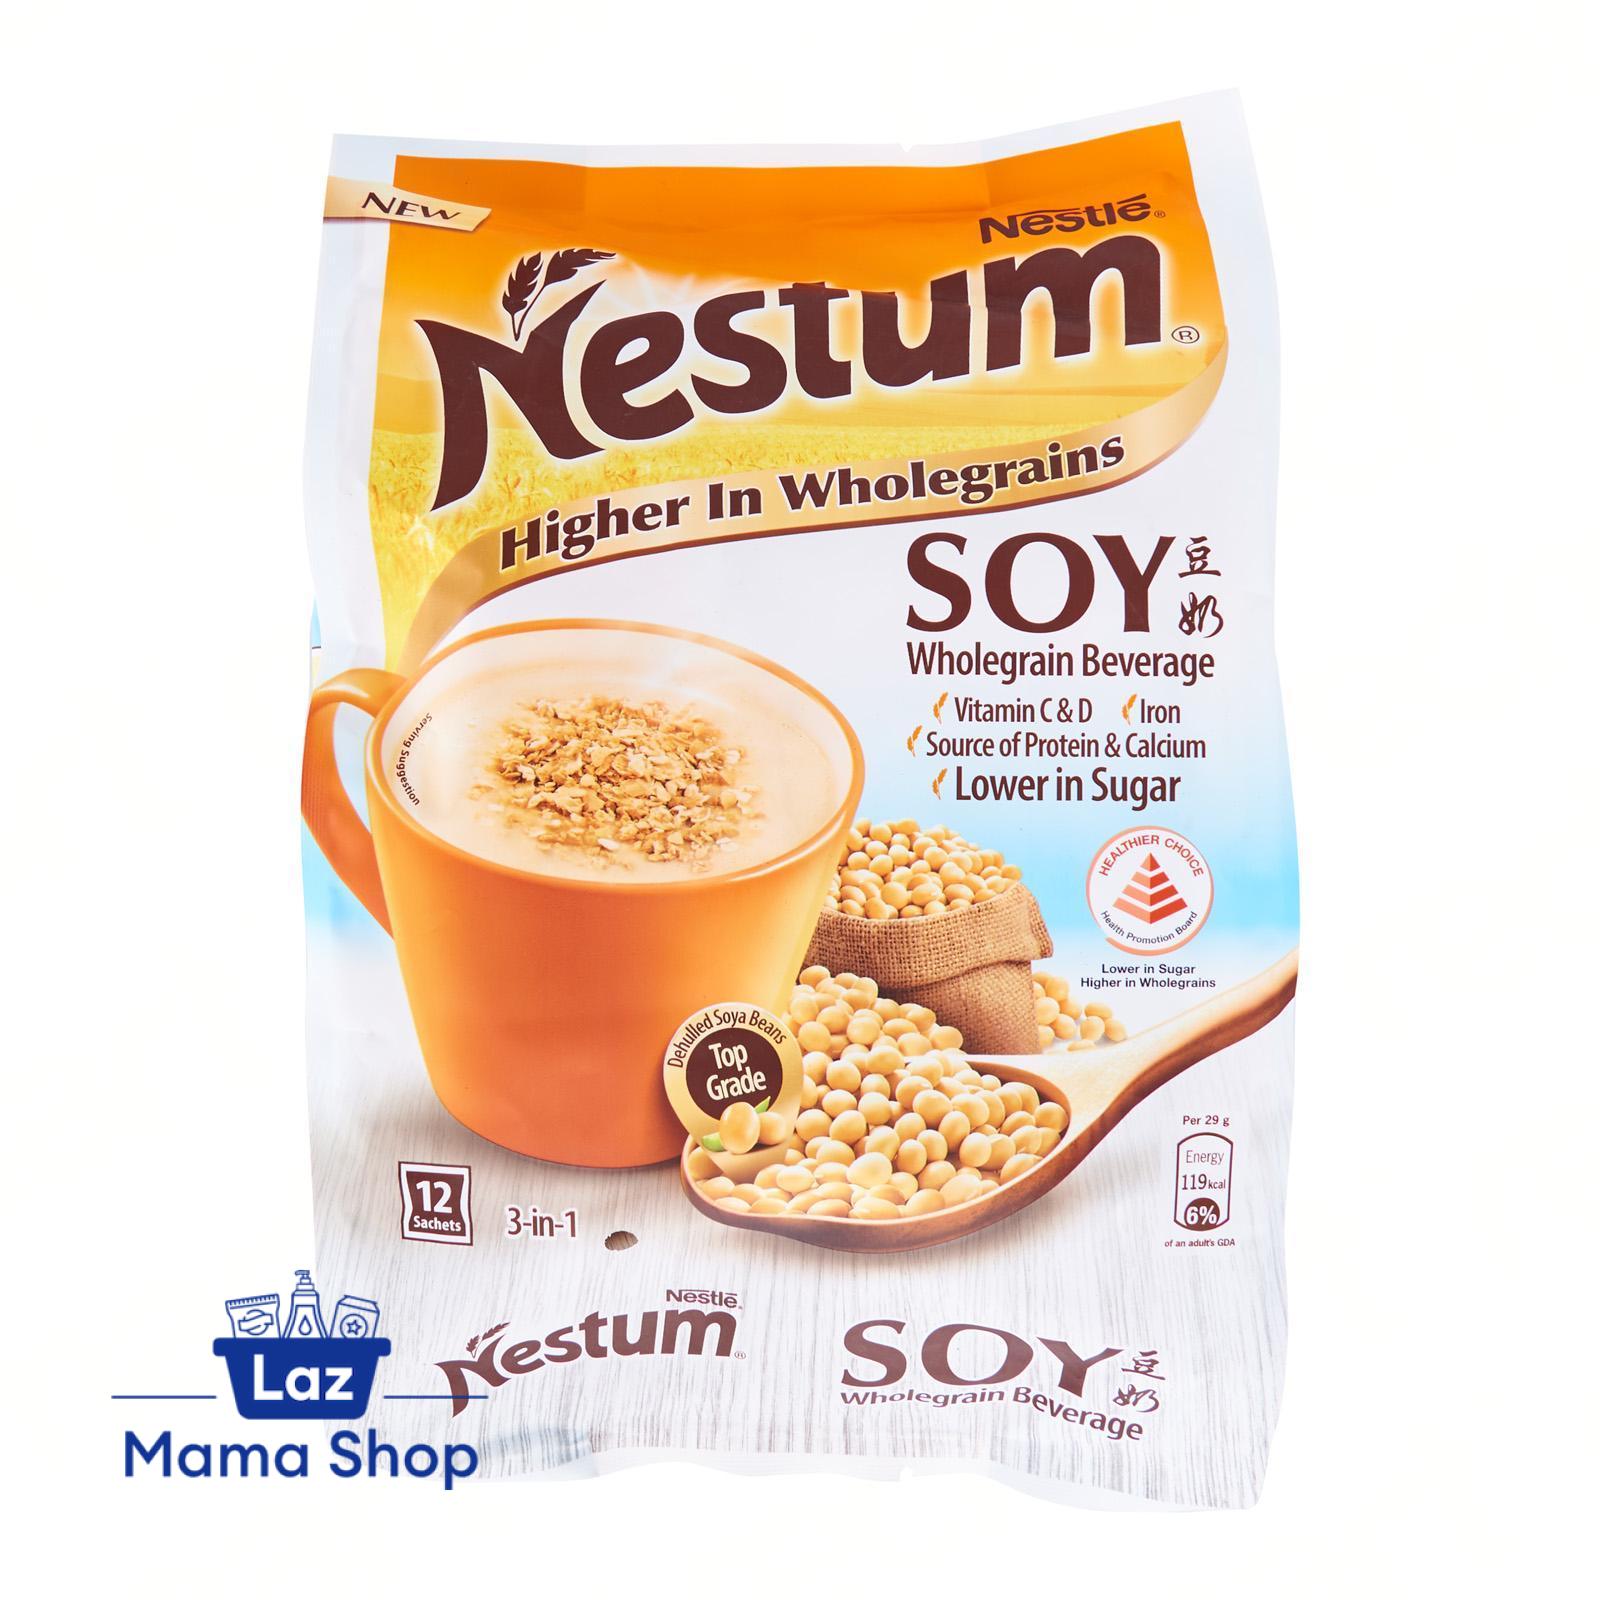 Buy Nestum 3 in 1 Dates & Prun  10 x 27 g from pandamart (Sg